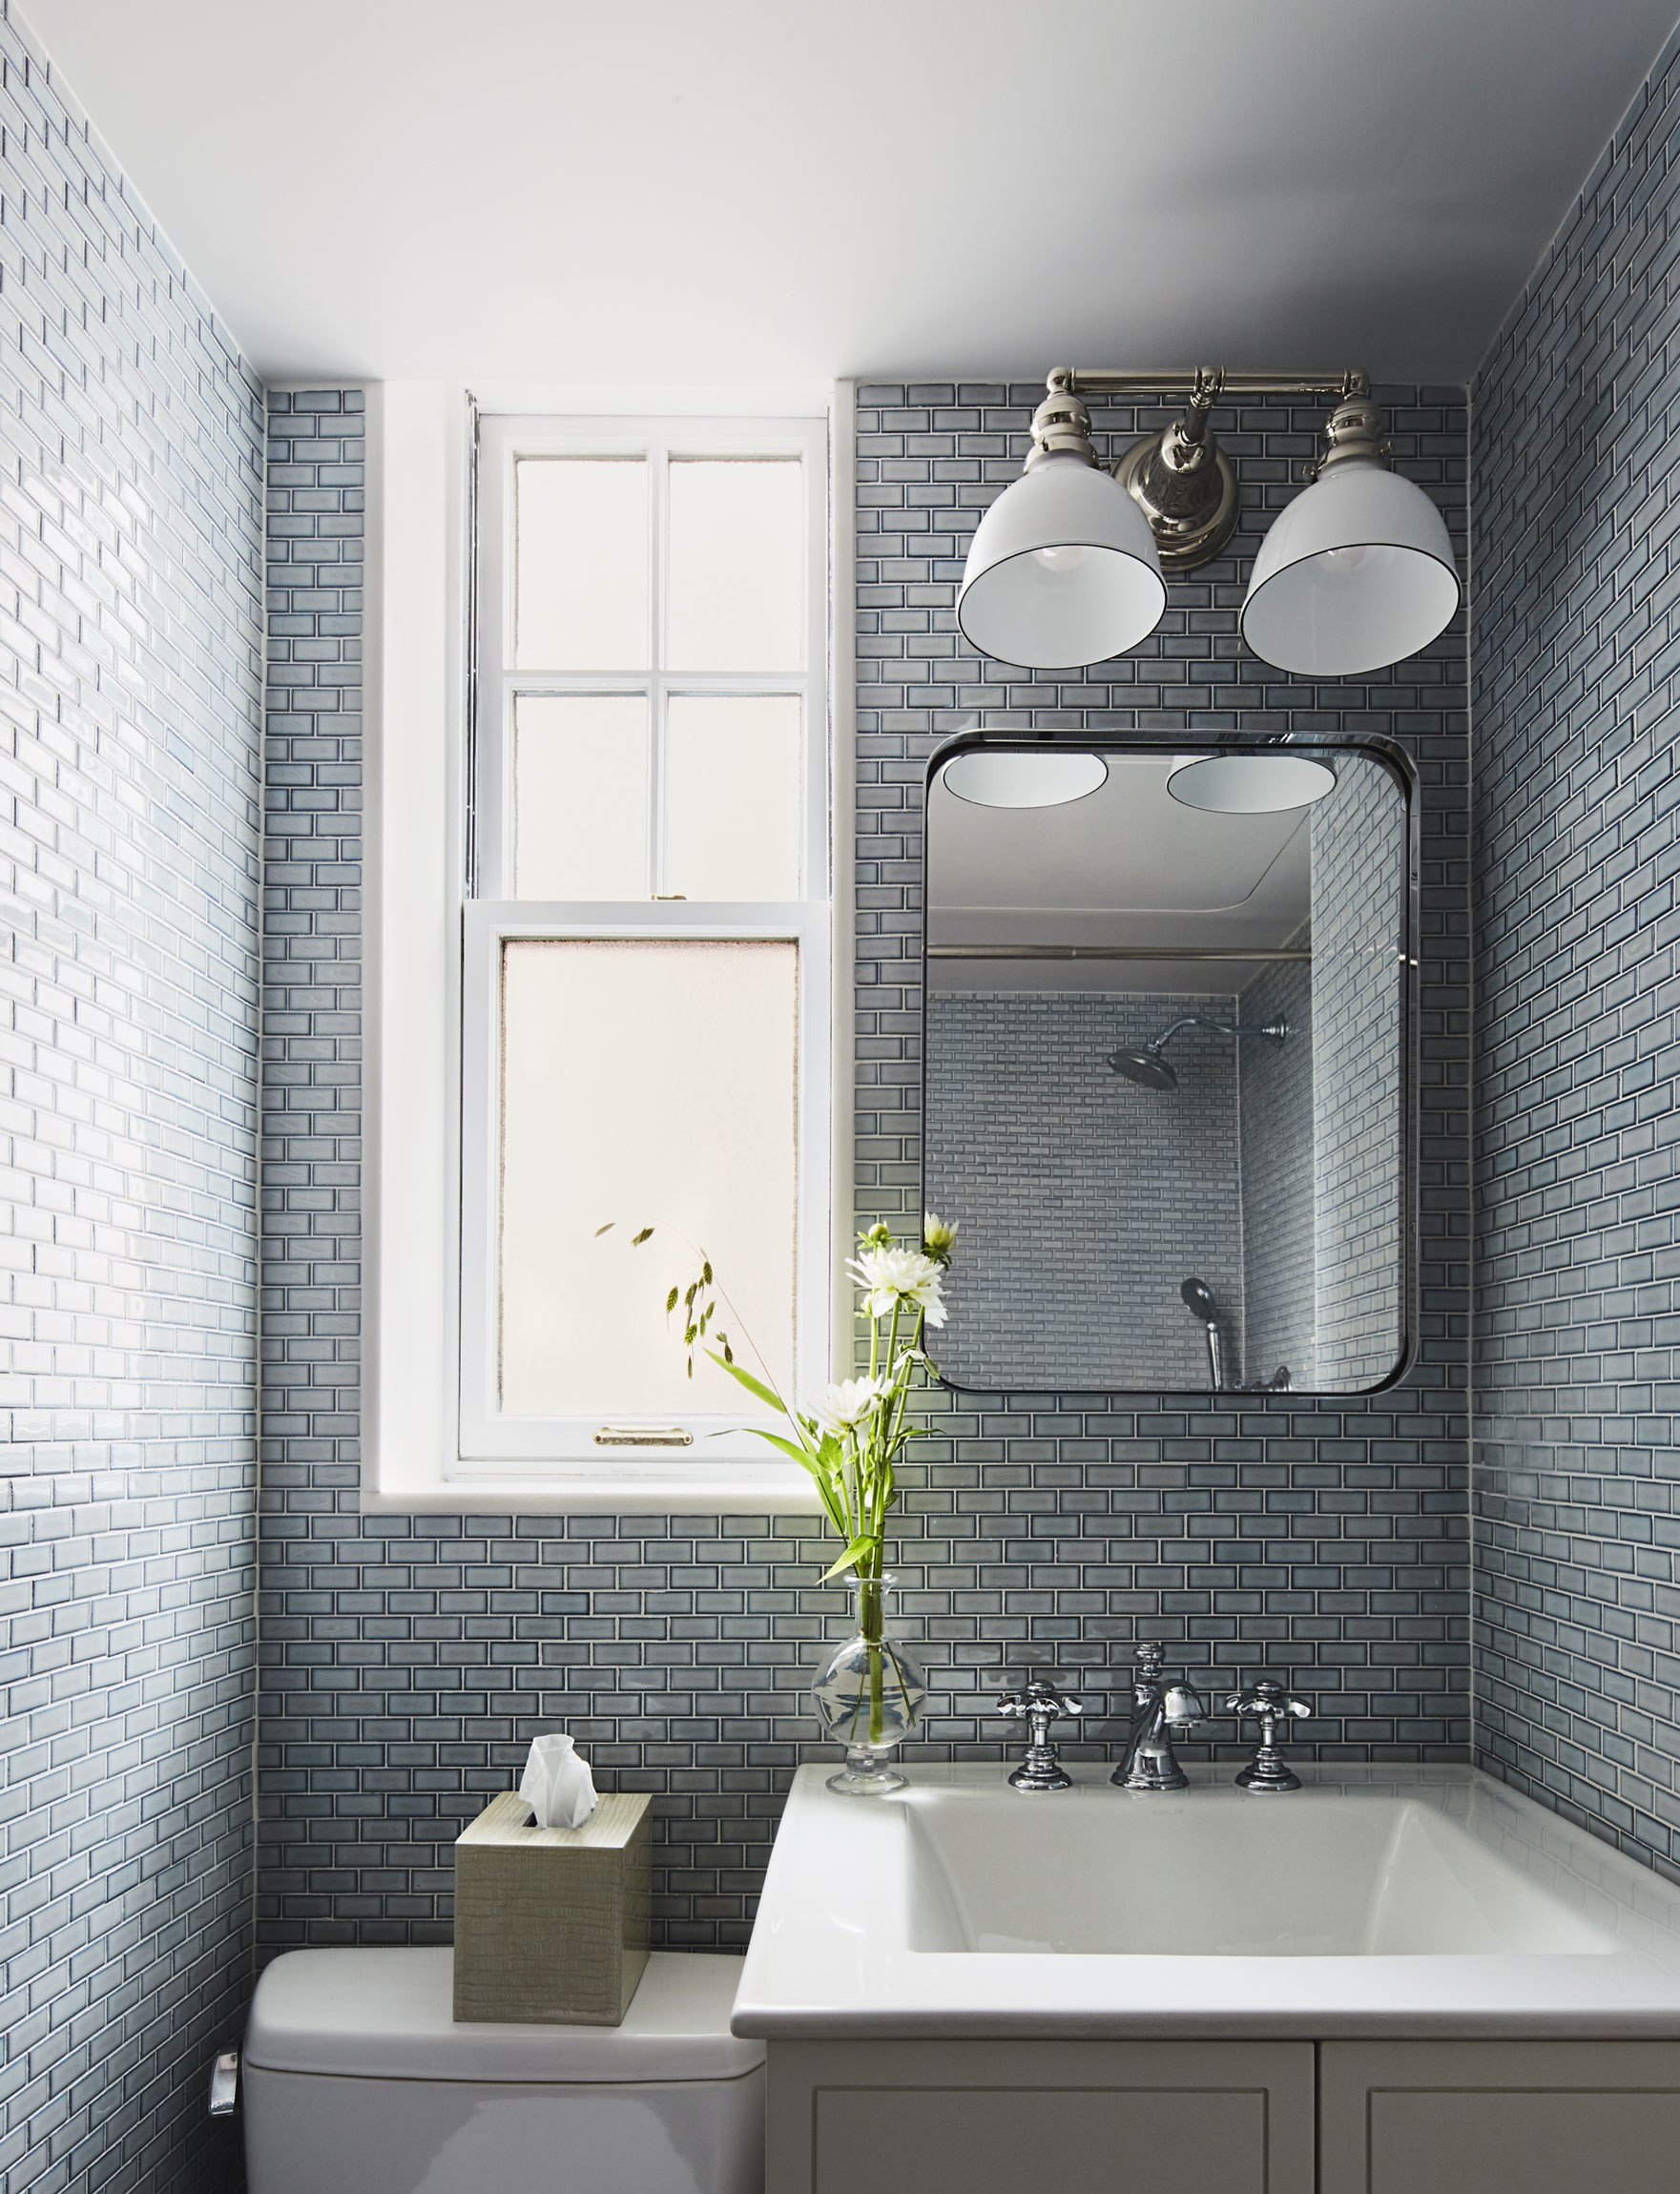 Bathroom Wall Tiles Design
 This Bathroom Tile Design Idea Changes Everything